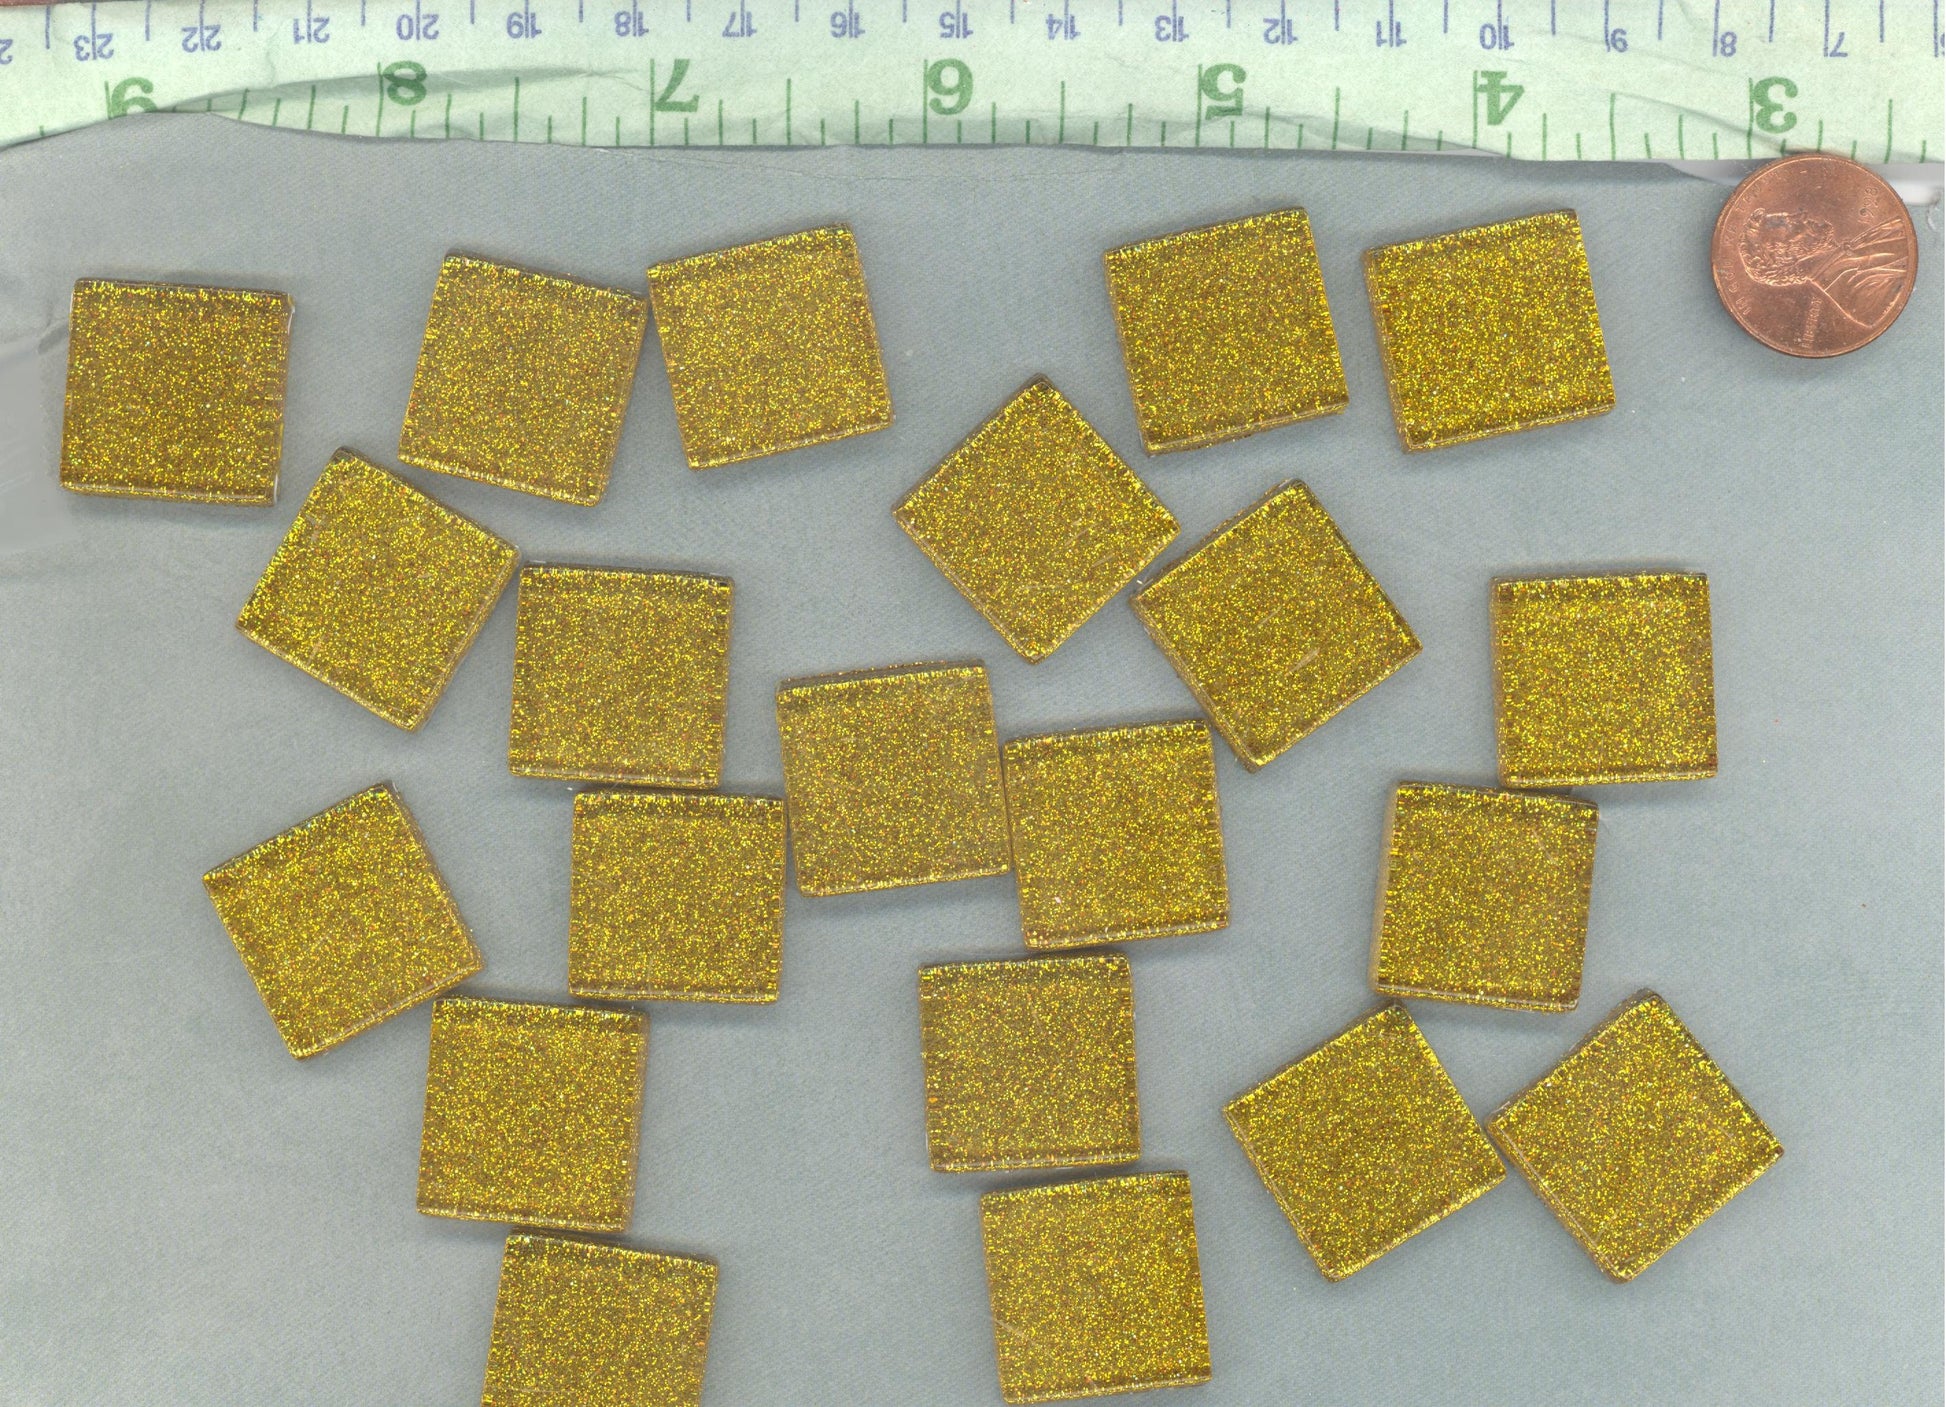 Gold Glitter Tiles - 20mm Mosaic Tiles - 25 Metallic Glass Tiles